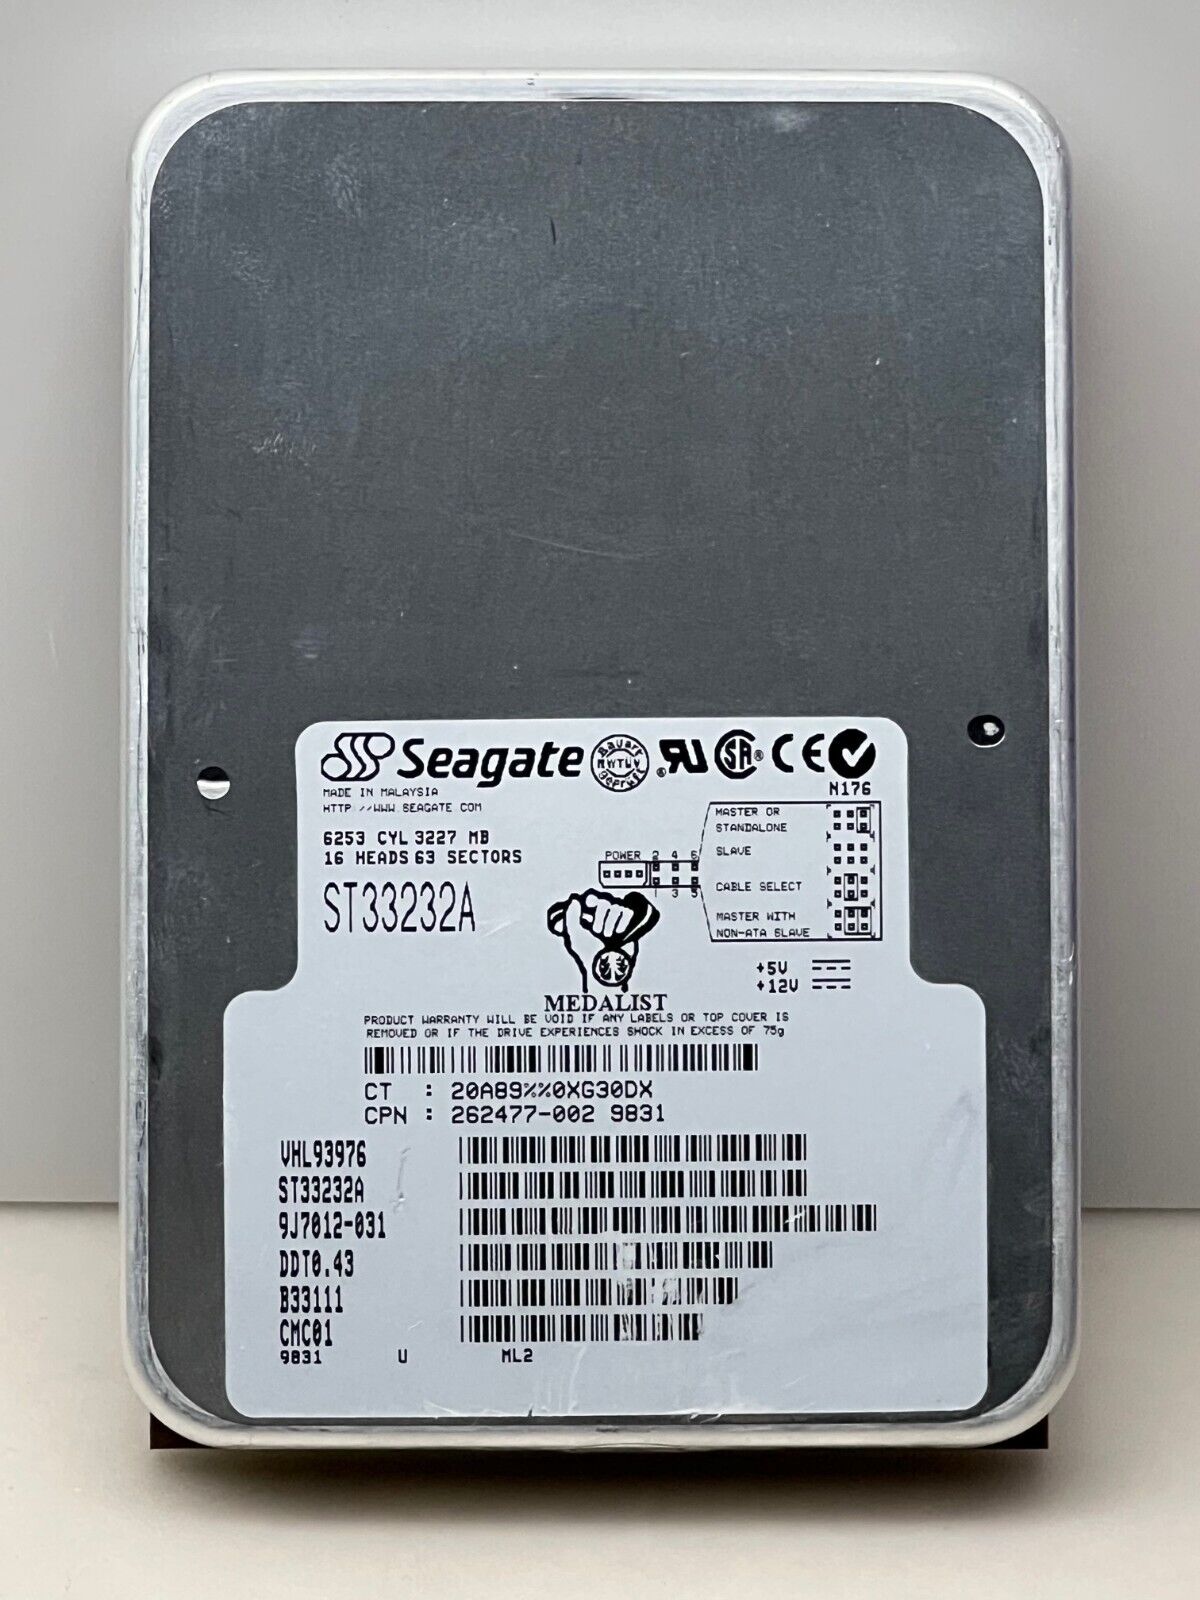 Seagate ST33232A 3.2 GB Refurbished 90 Day Warranty 